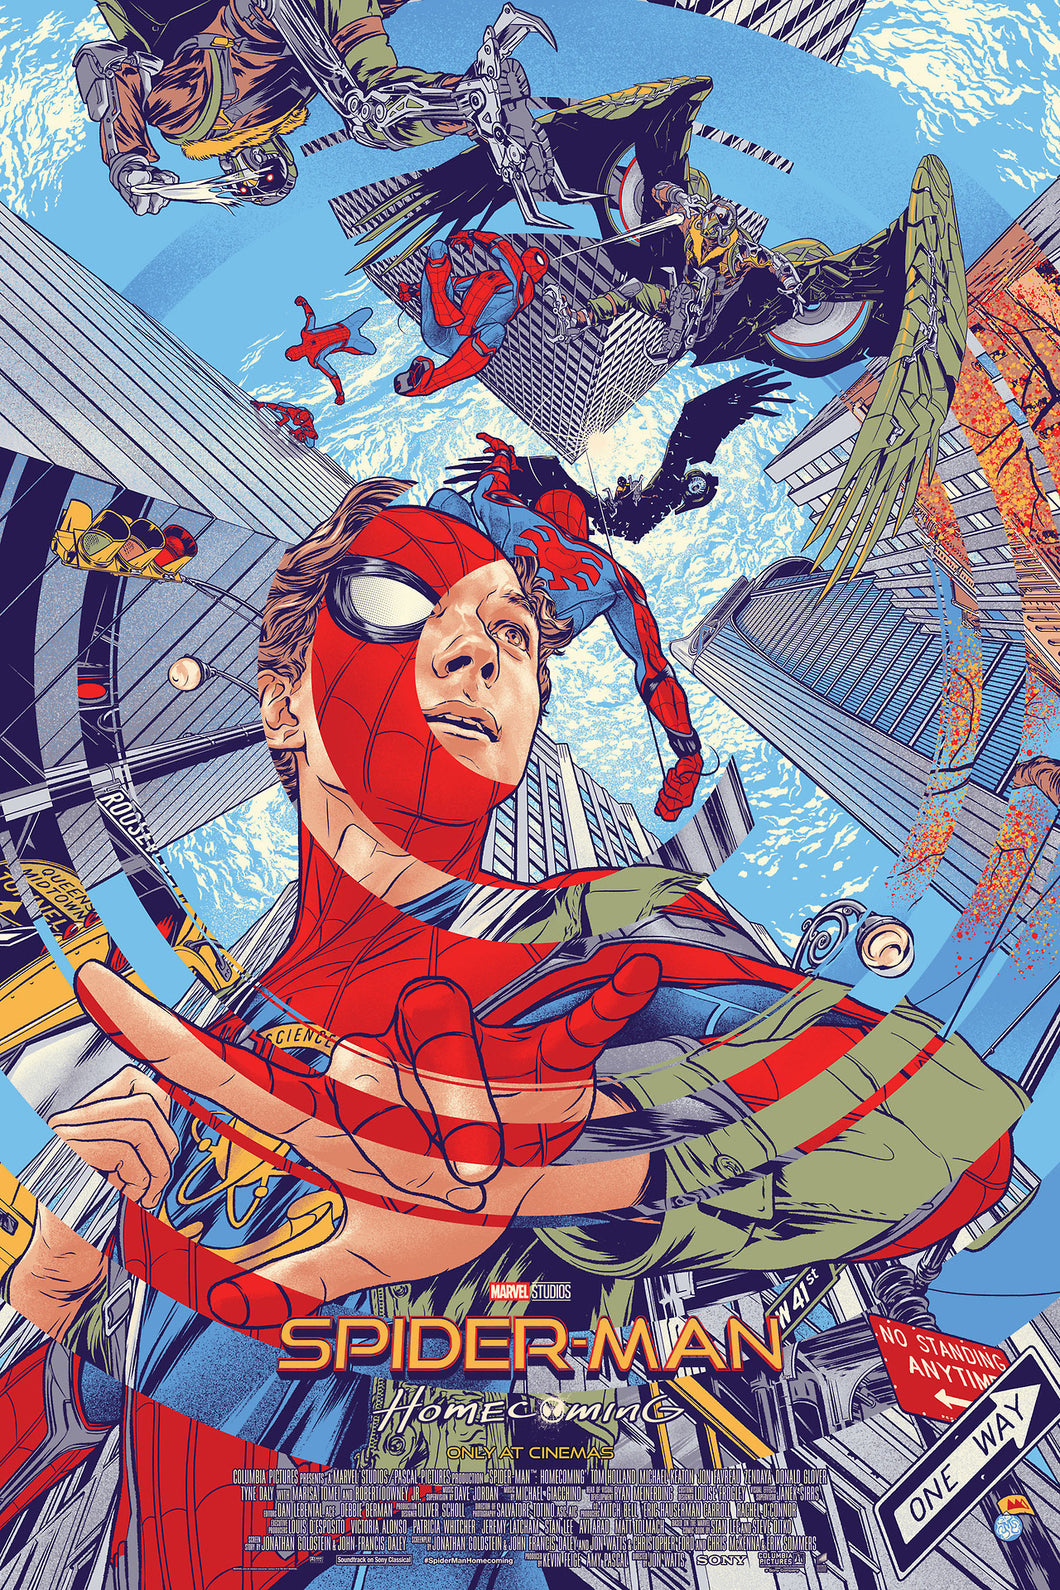 Poster Pelicula Spiderman: Homecoming